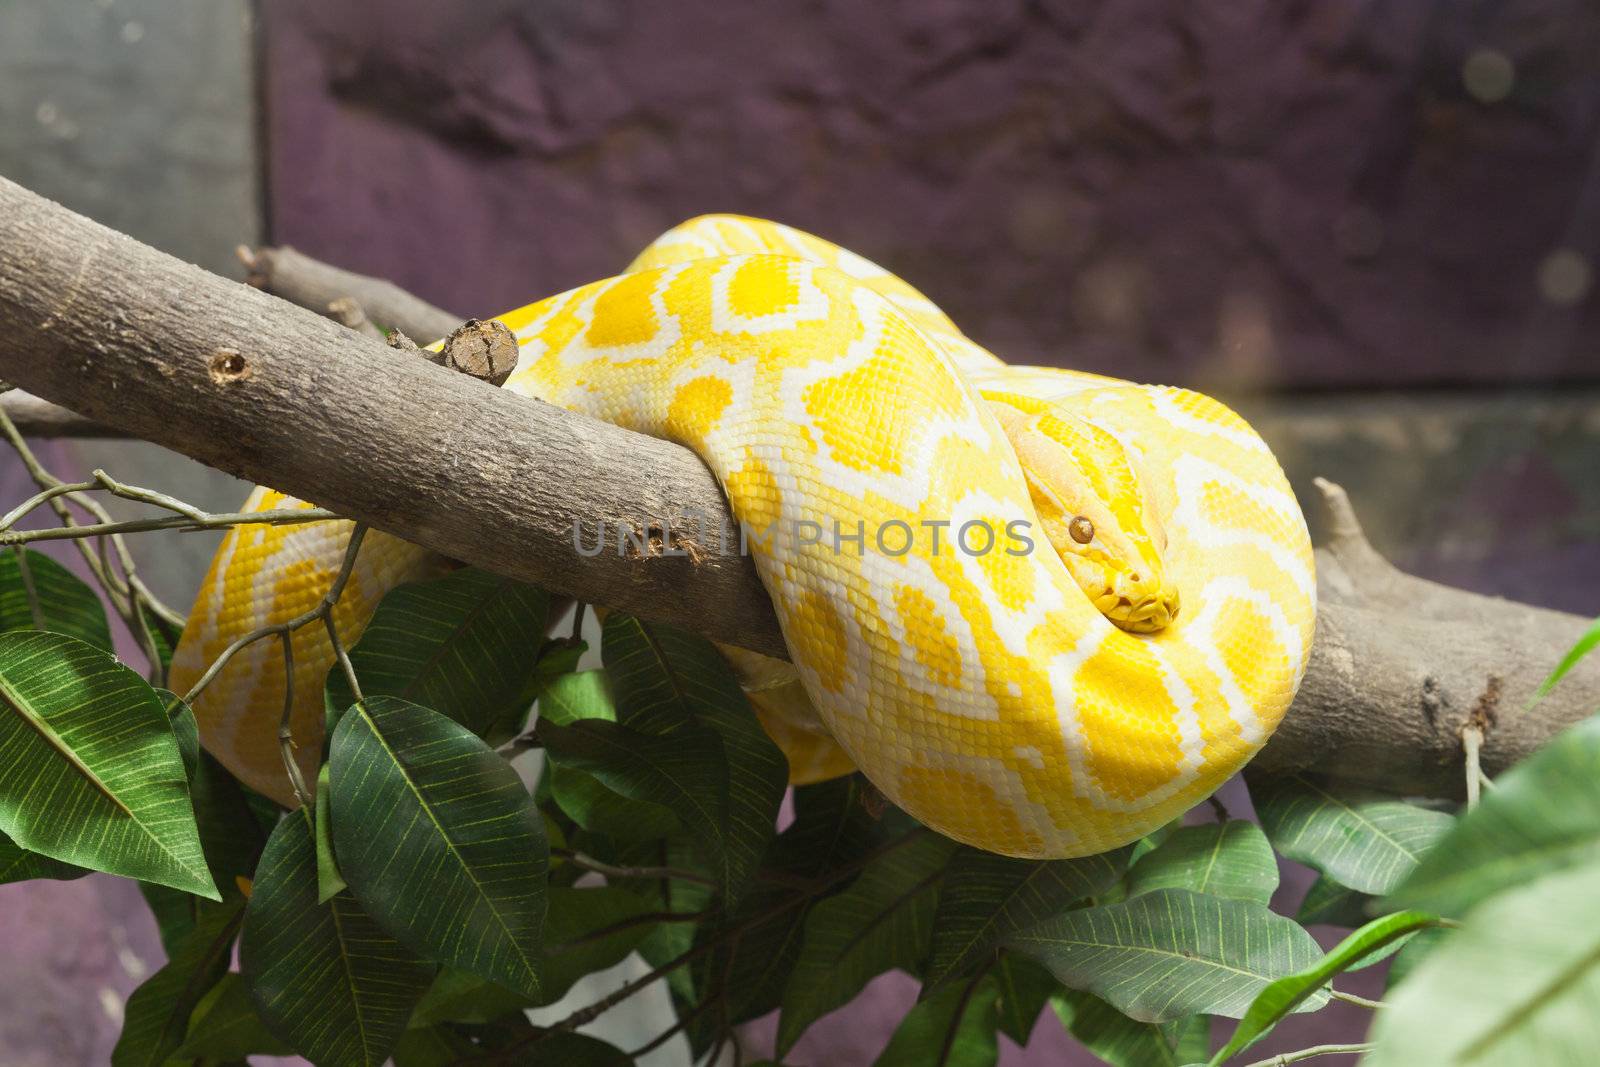 Snake, Golden Thai Python, focus at eyes